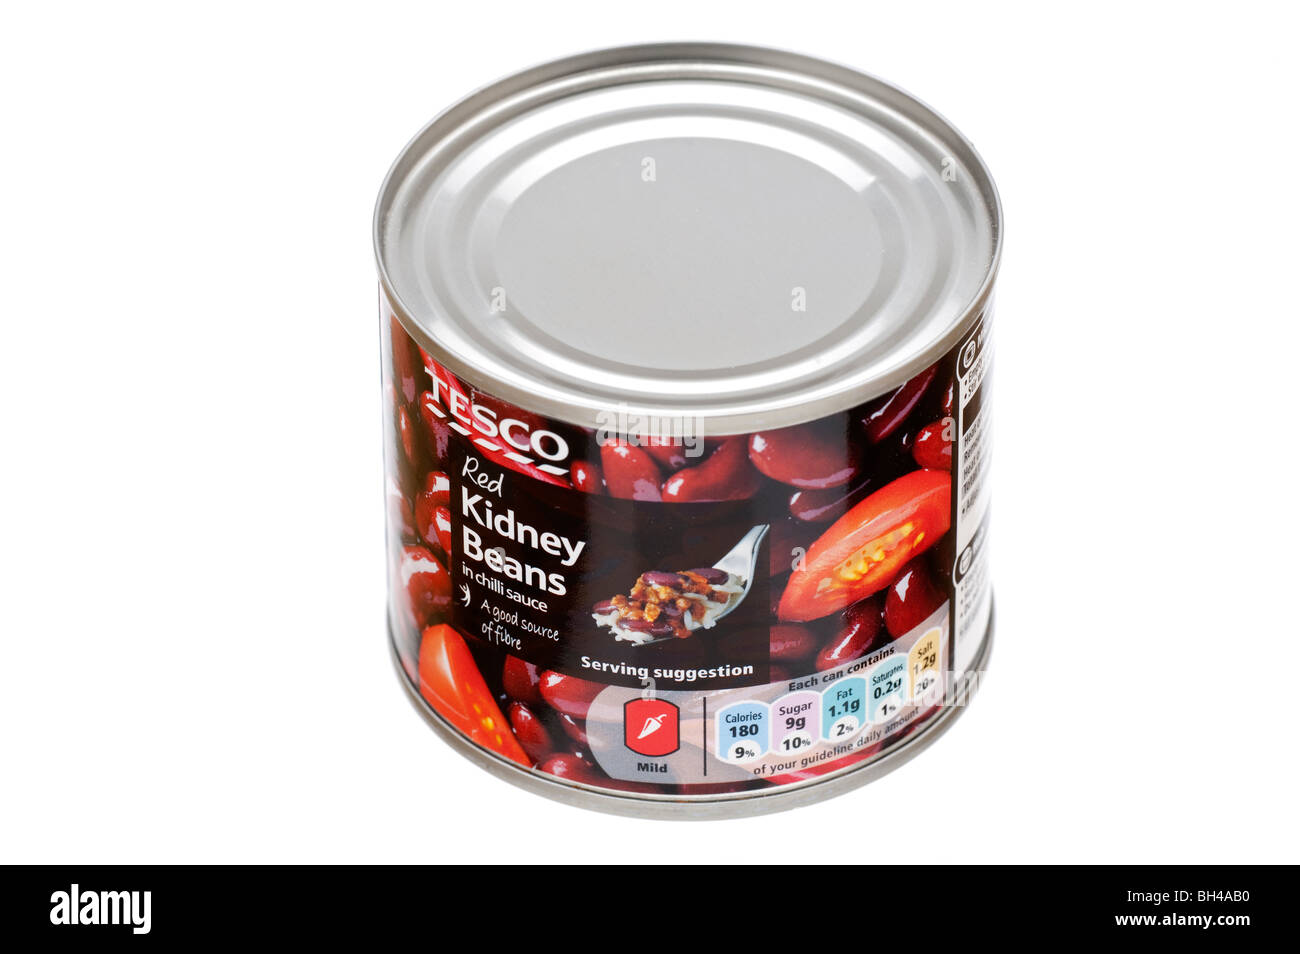 Small tin of tesco Kidney beans in chilli sauce Stock Photo